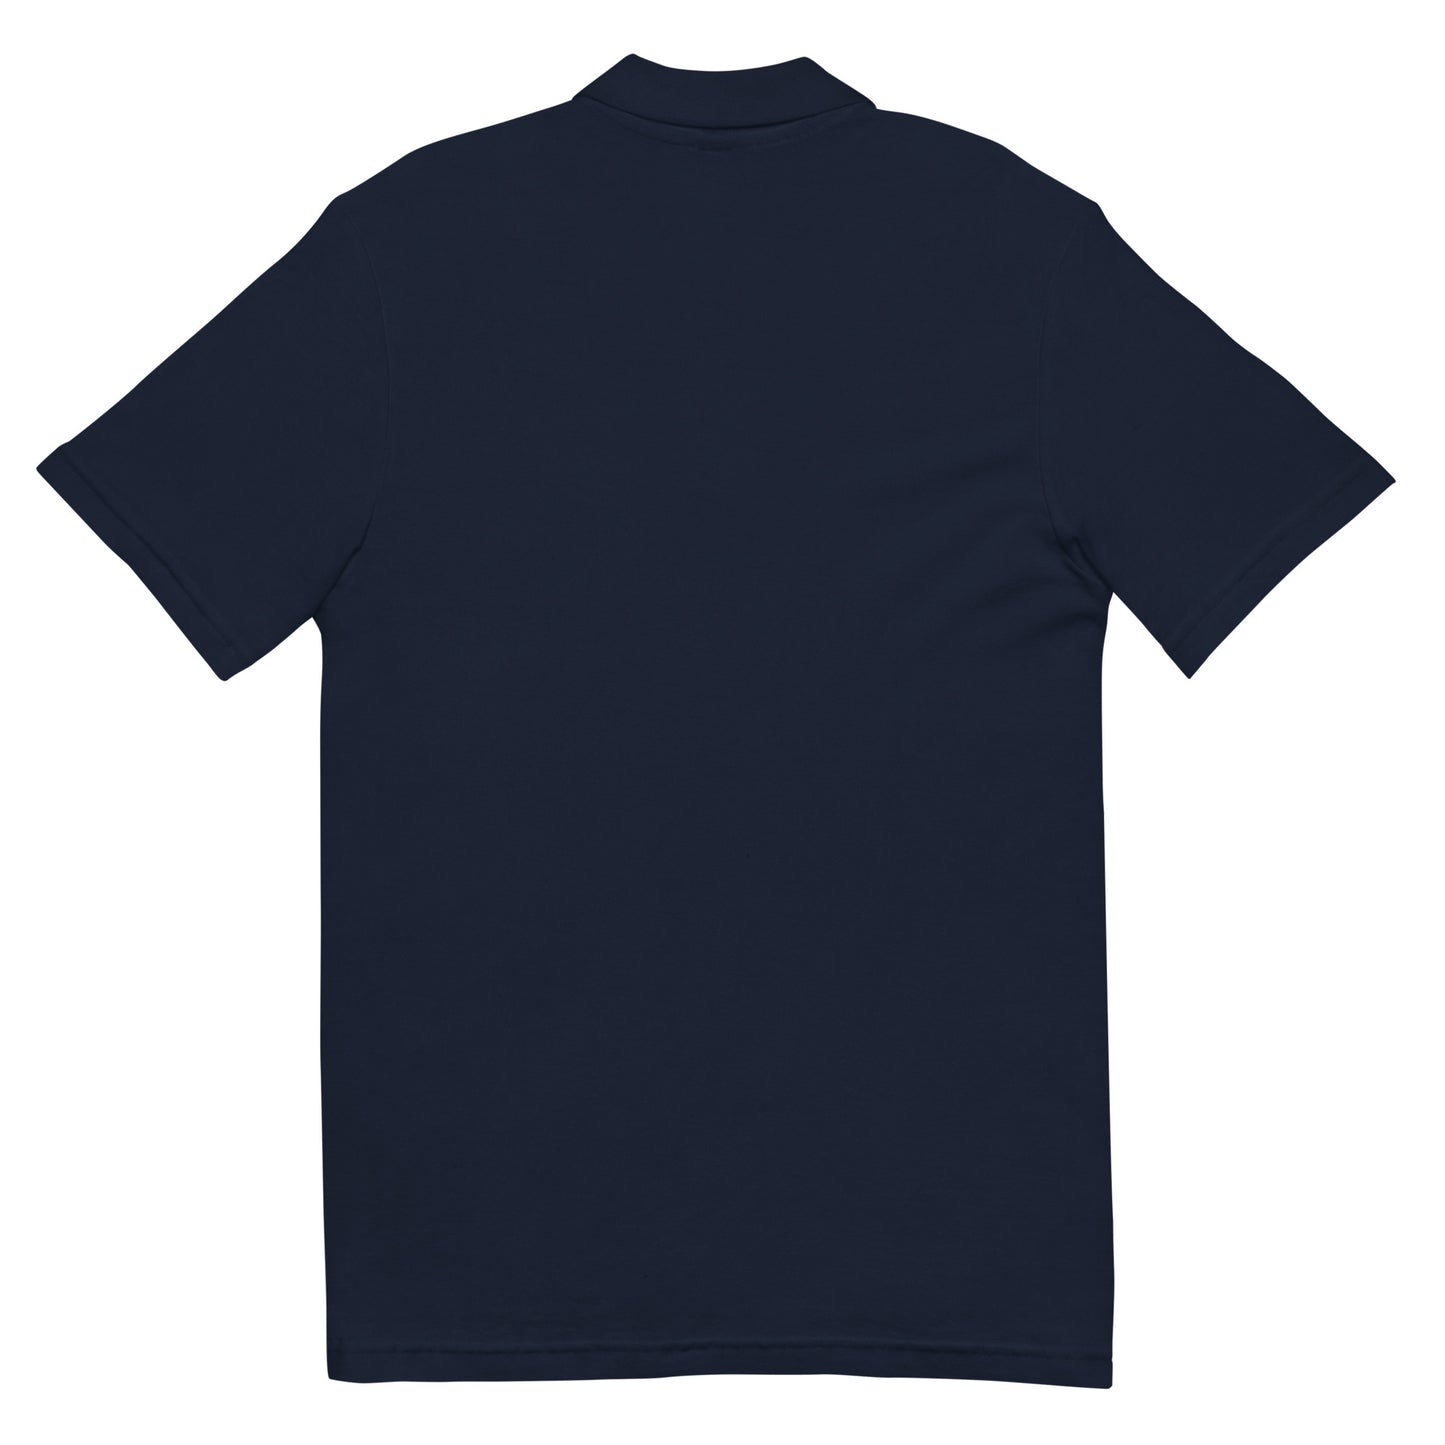 Crown Logo polo shirt Navy (Made to Order)